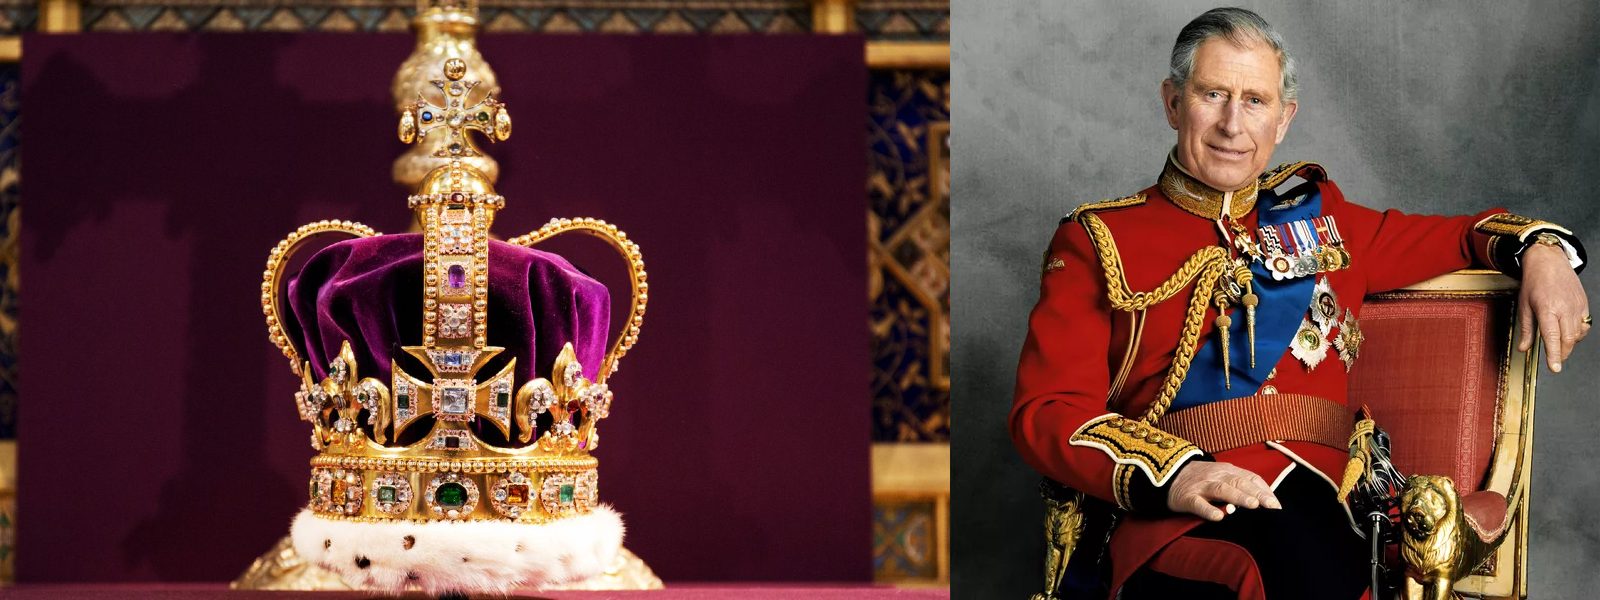 Coronation of King Charles III in May 2023